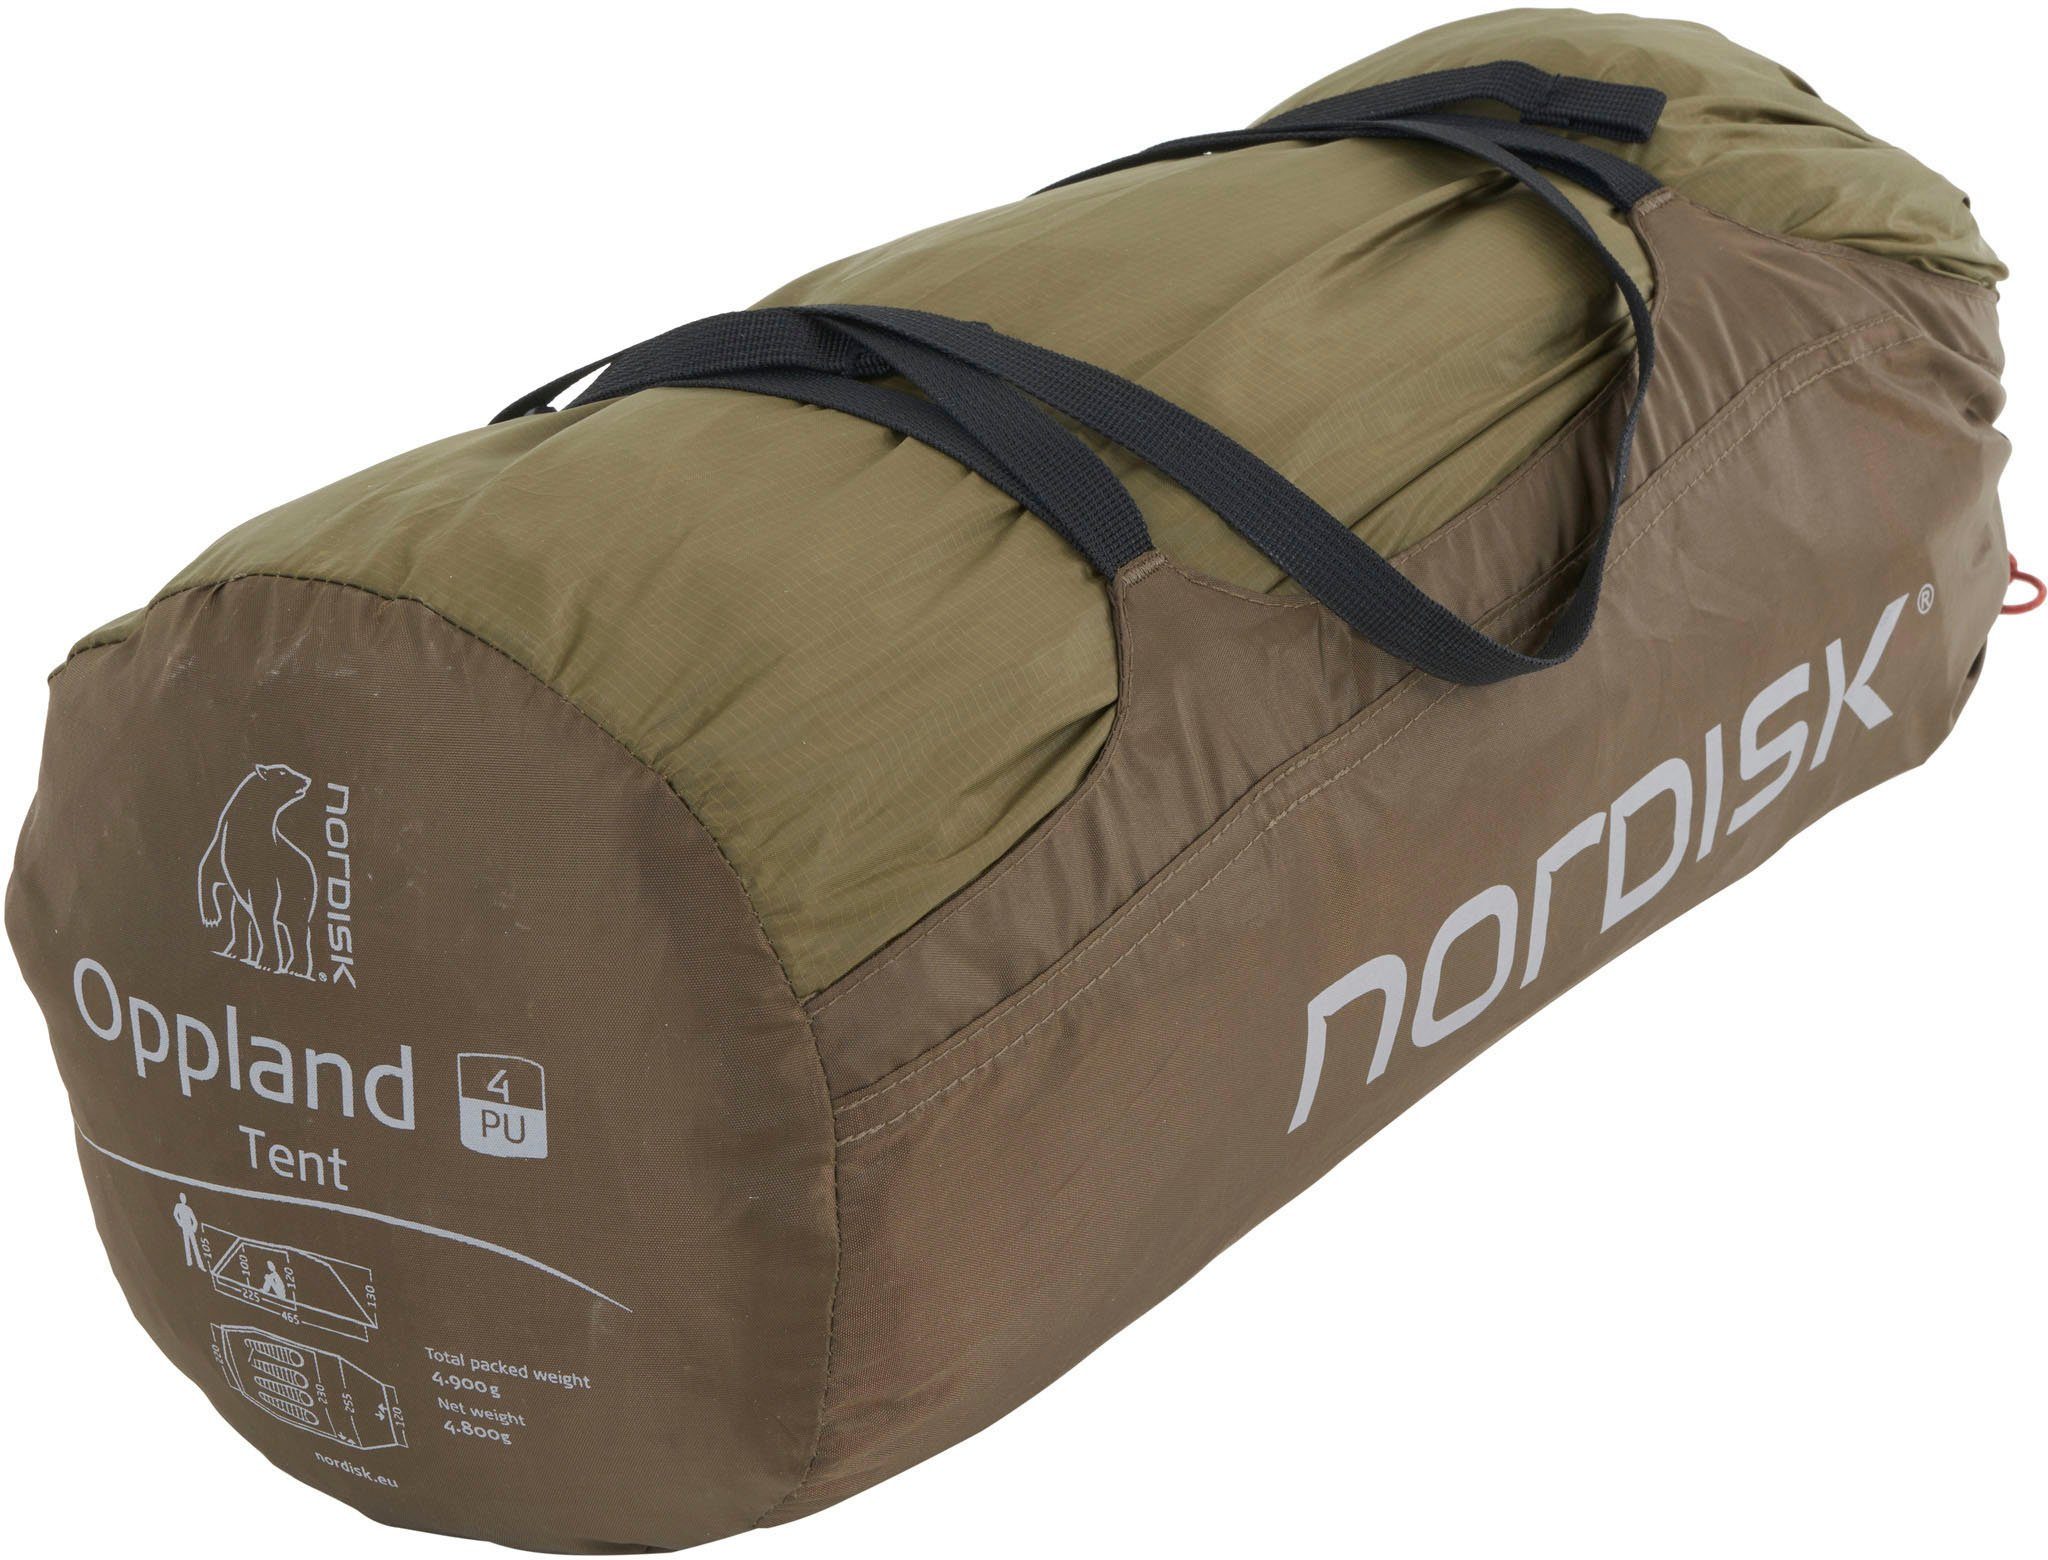 Nordisk Tunnelzelt Oppland 4 PU 4 1 (Packung, Personen: tlg) Dark Olive, Tent